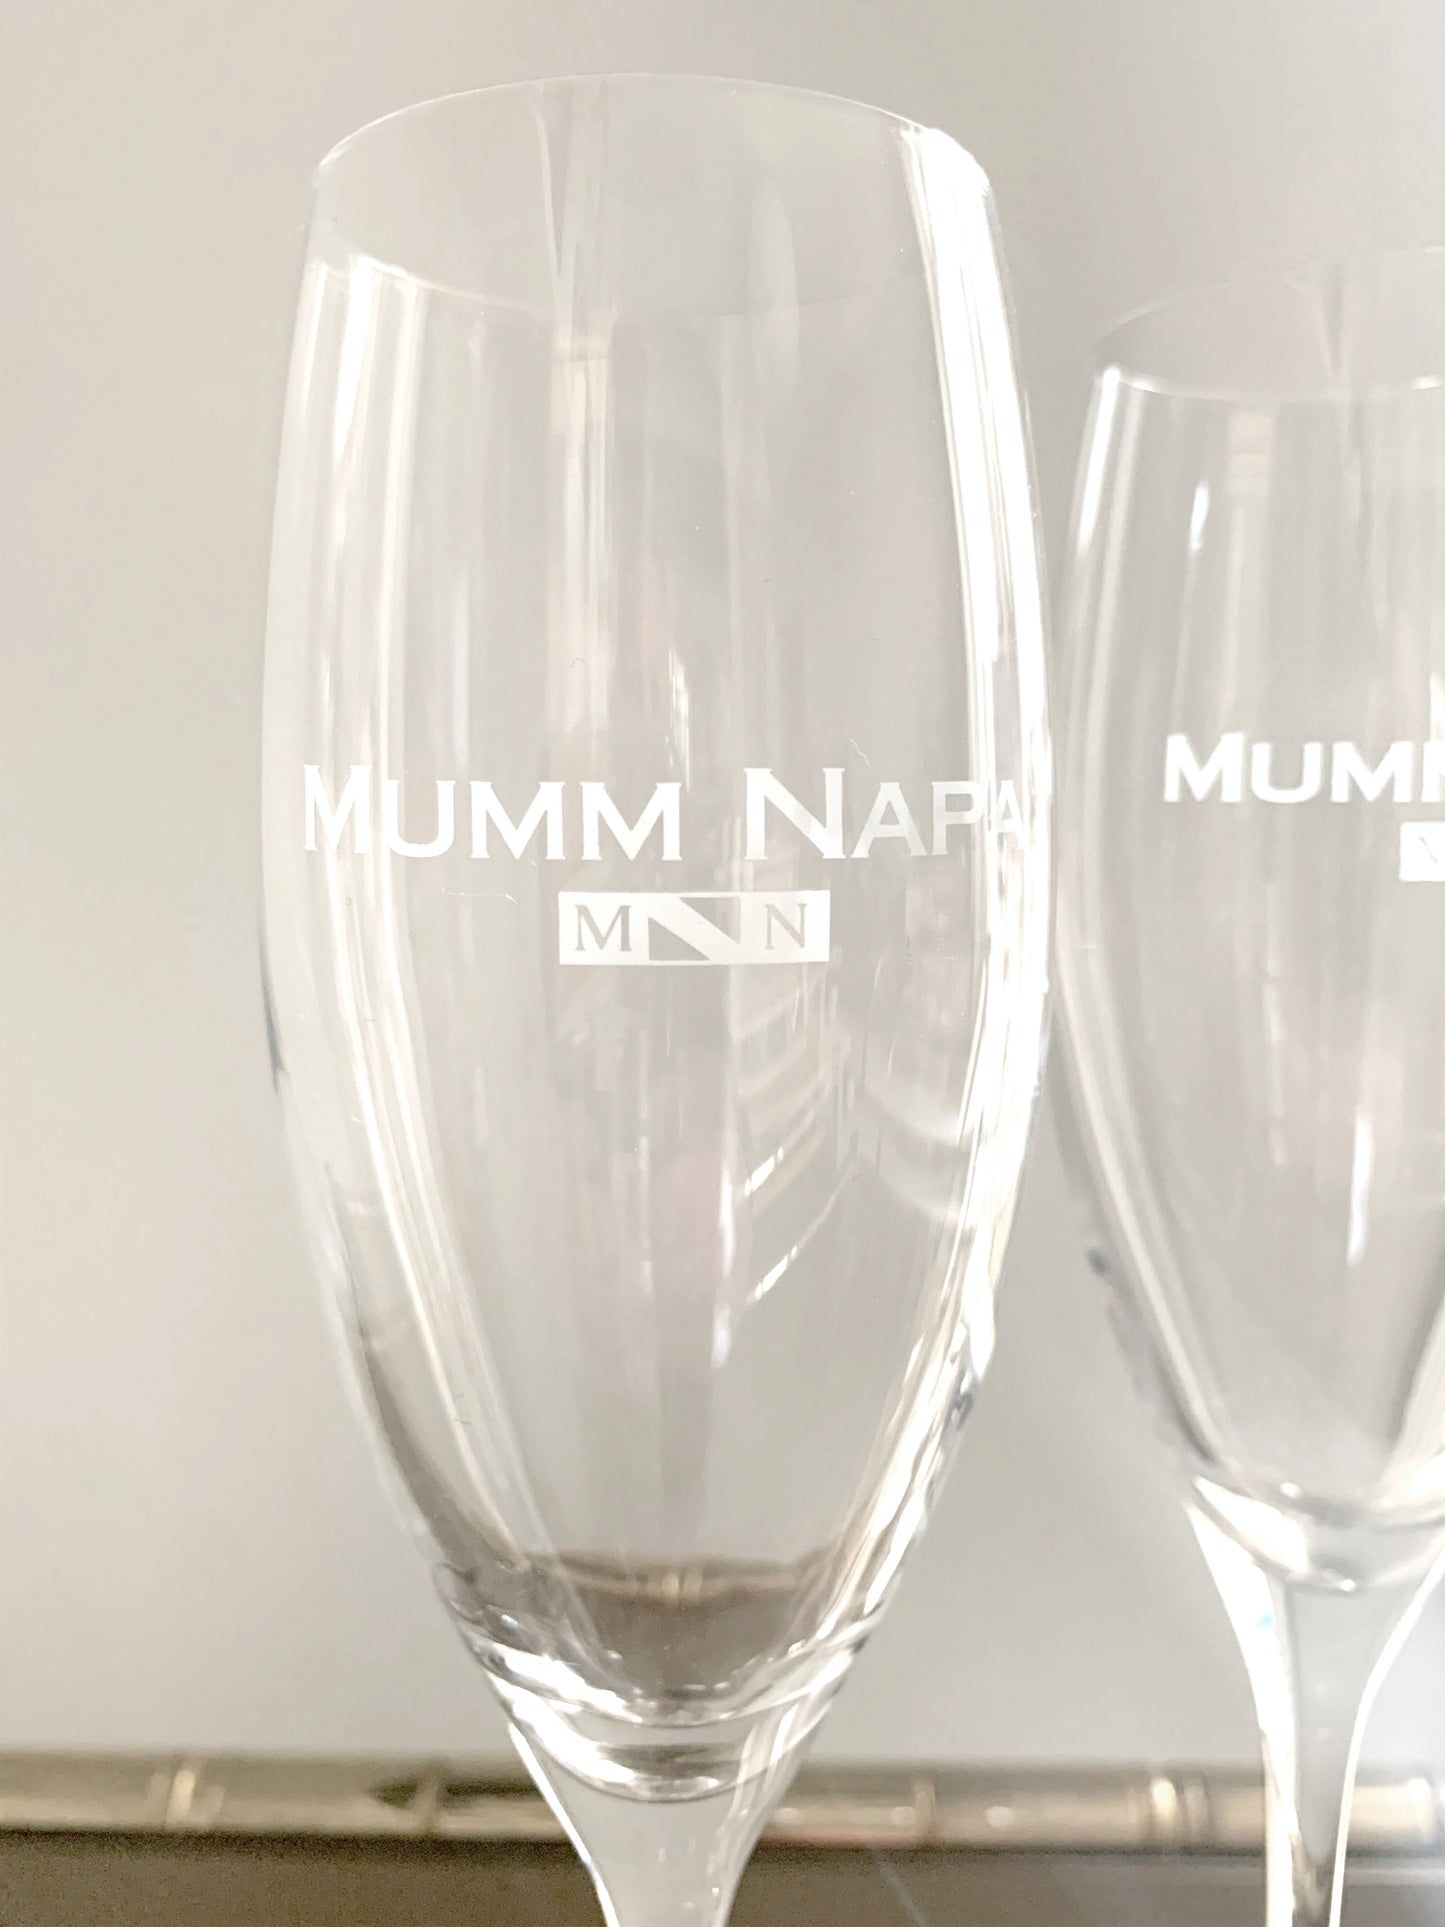 2 x MUMM Napa Champagne Flute Glasses / Excellent Condition / Napa Valley - USA